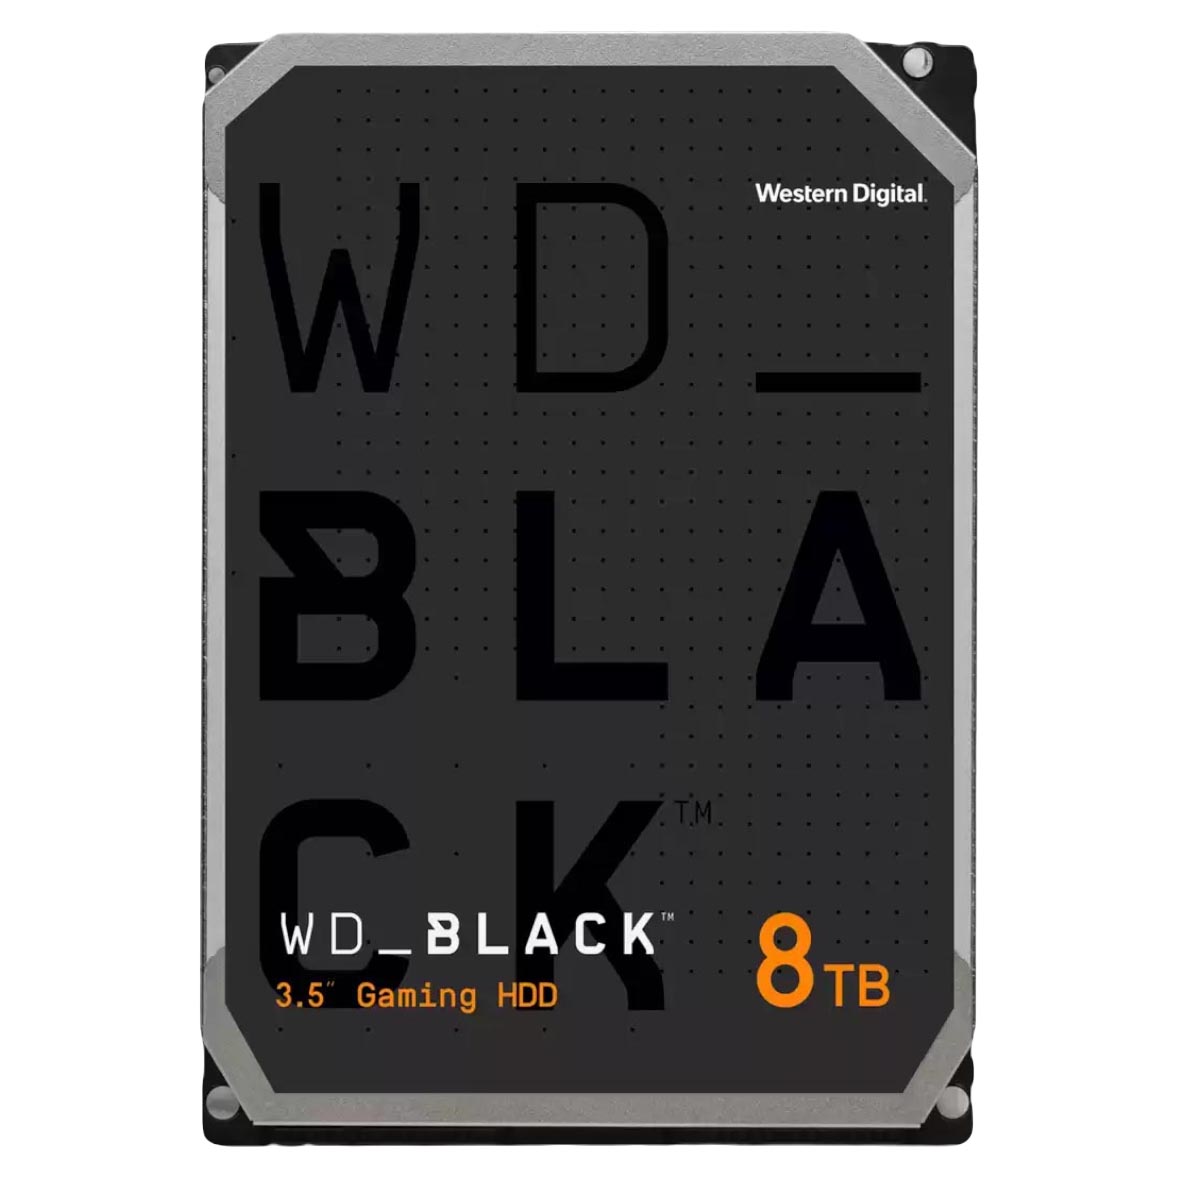 Внутренний жесткий диск Western Digital WD Black Gaming, WD8002FZWX, 8 Тб внутренний жесткий диск western digital gold 3 5 8 тб wd8004fryz